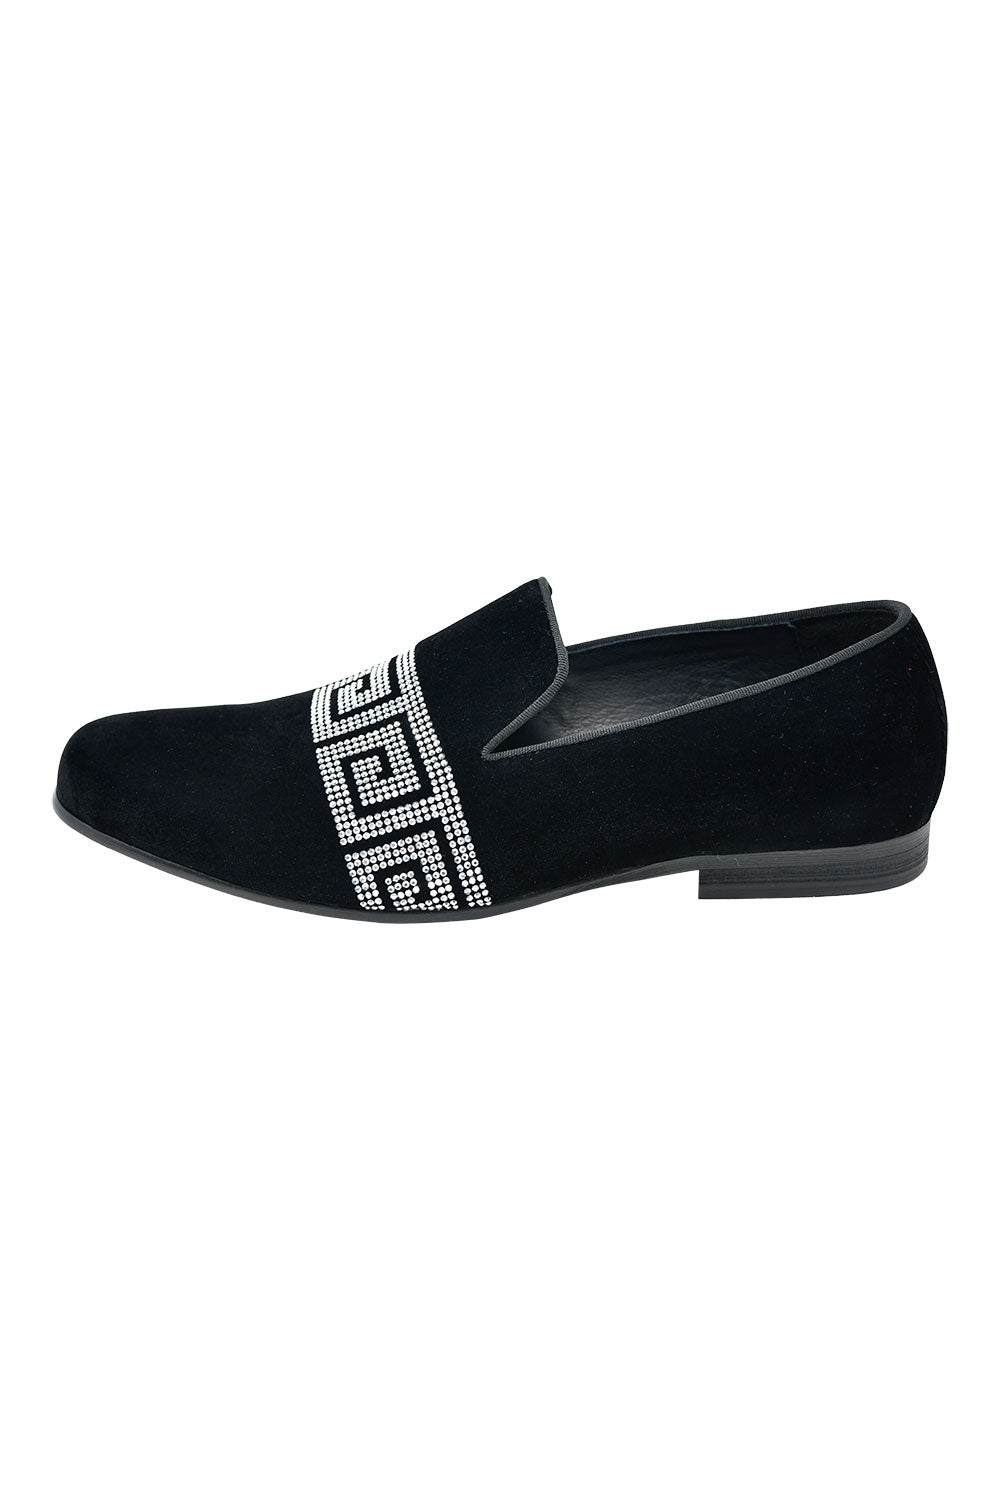 BARABAS Men's Rhinestone Greek key Pattern Slip On Dress Shoes SH3067 Black Silver